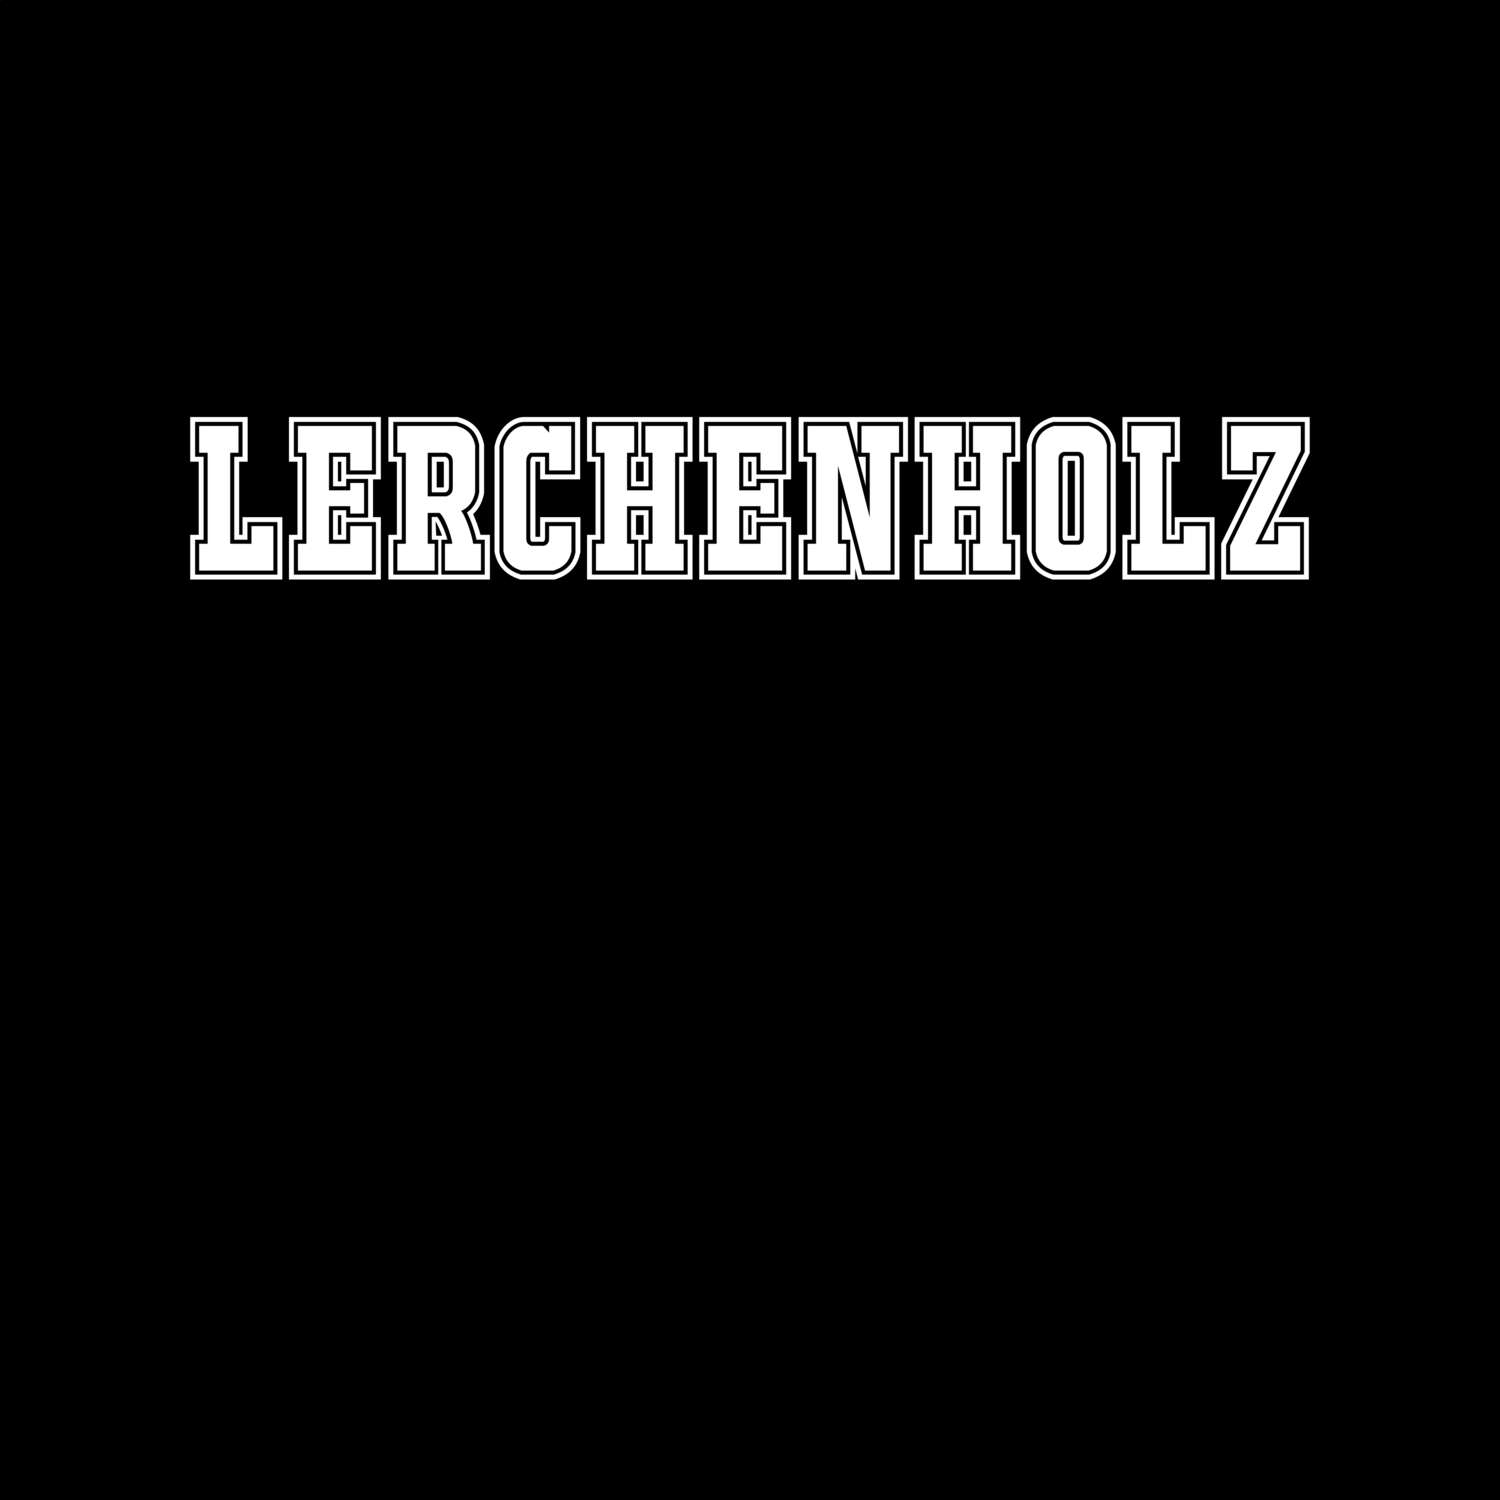 Lerchenholz T-Shirt »Classic«